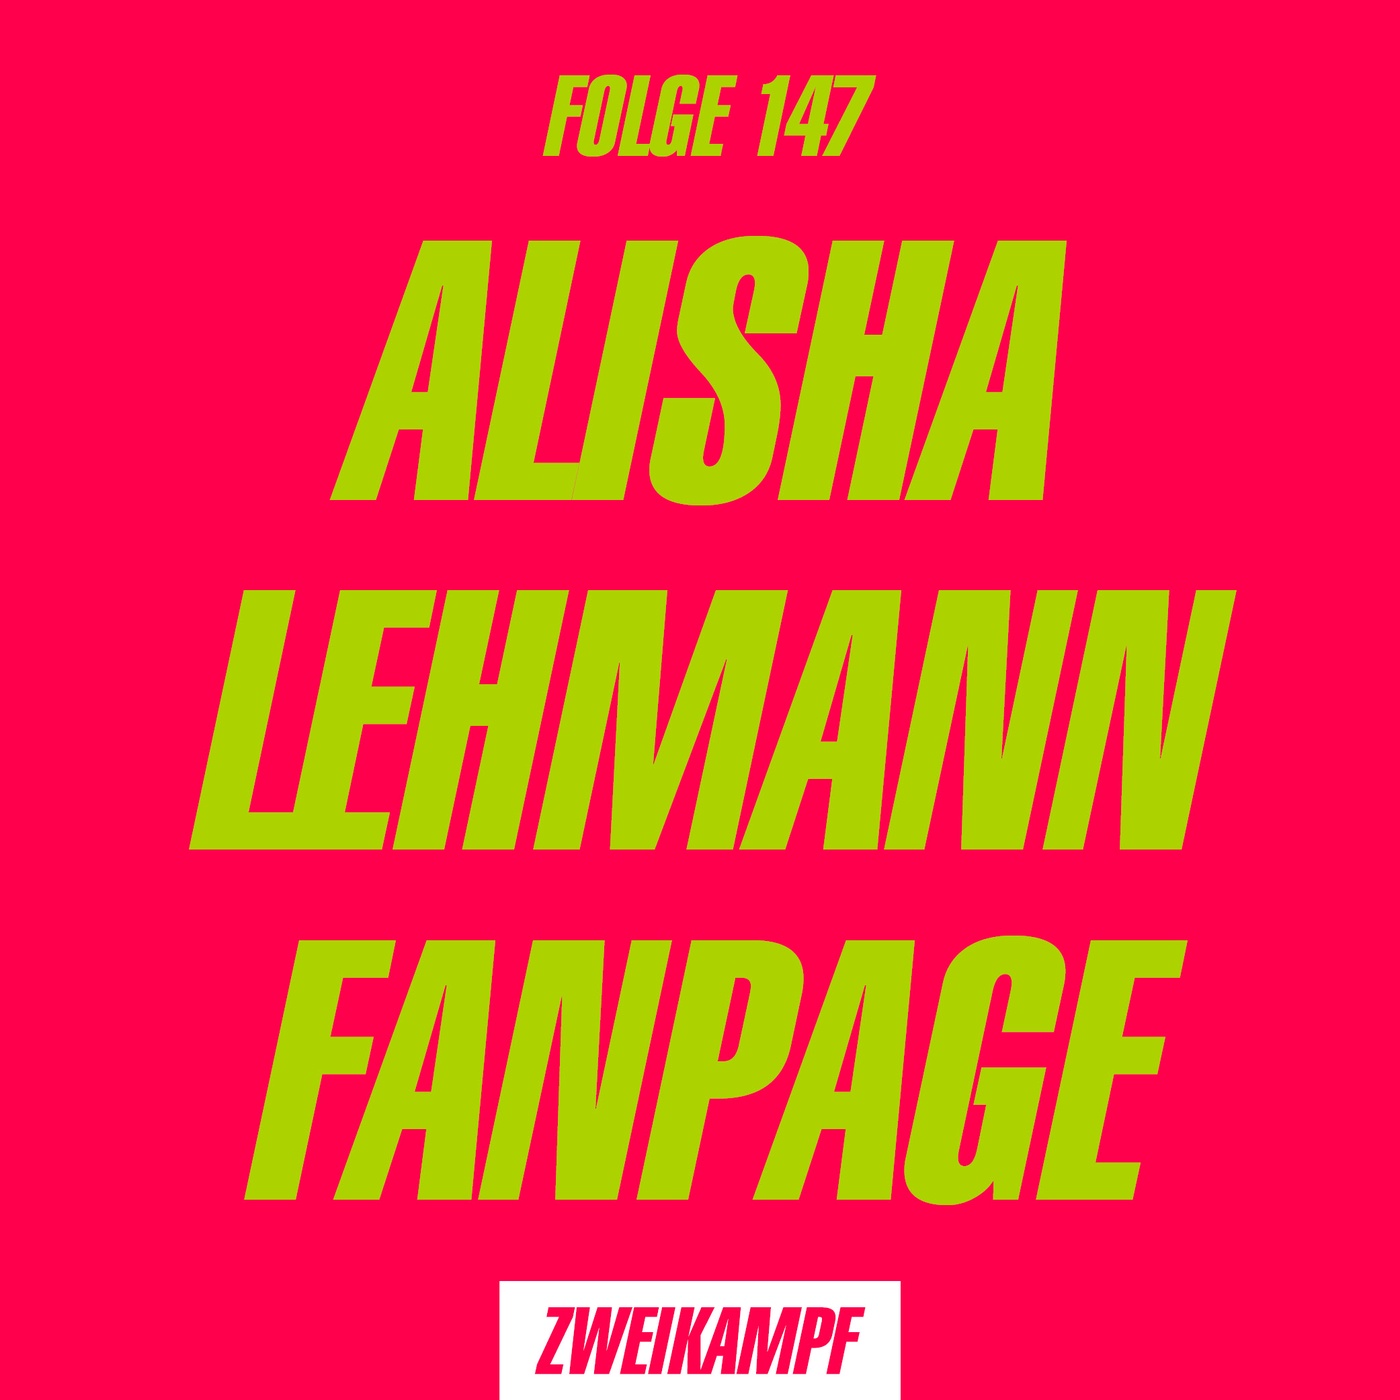 Folge 147: Alisha Lehmann Fanpage